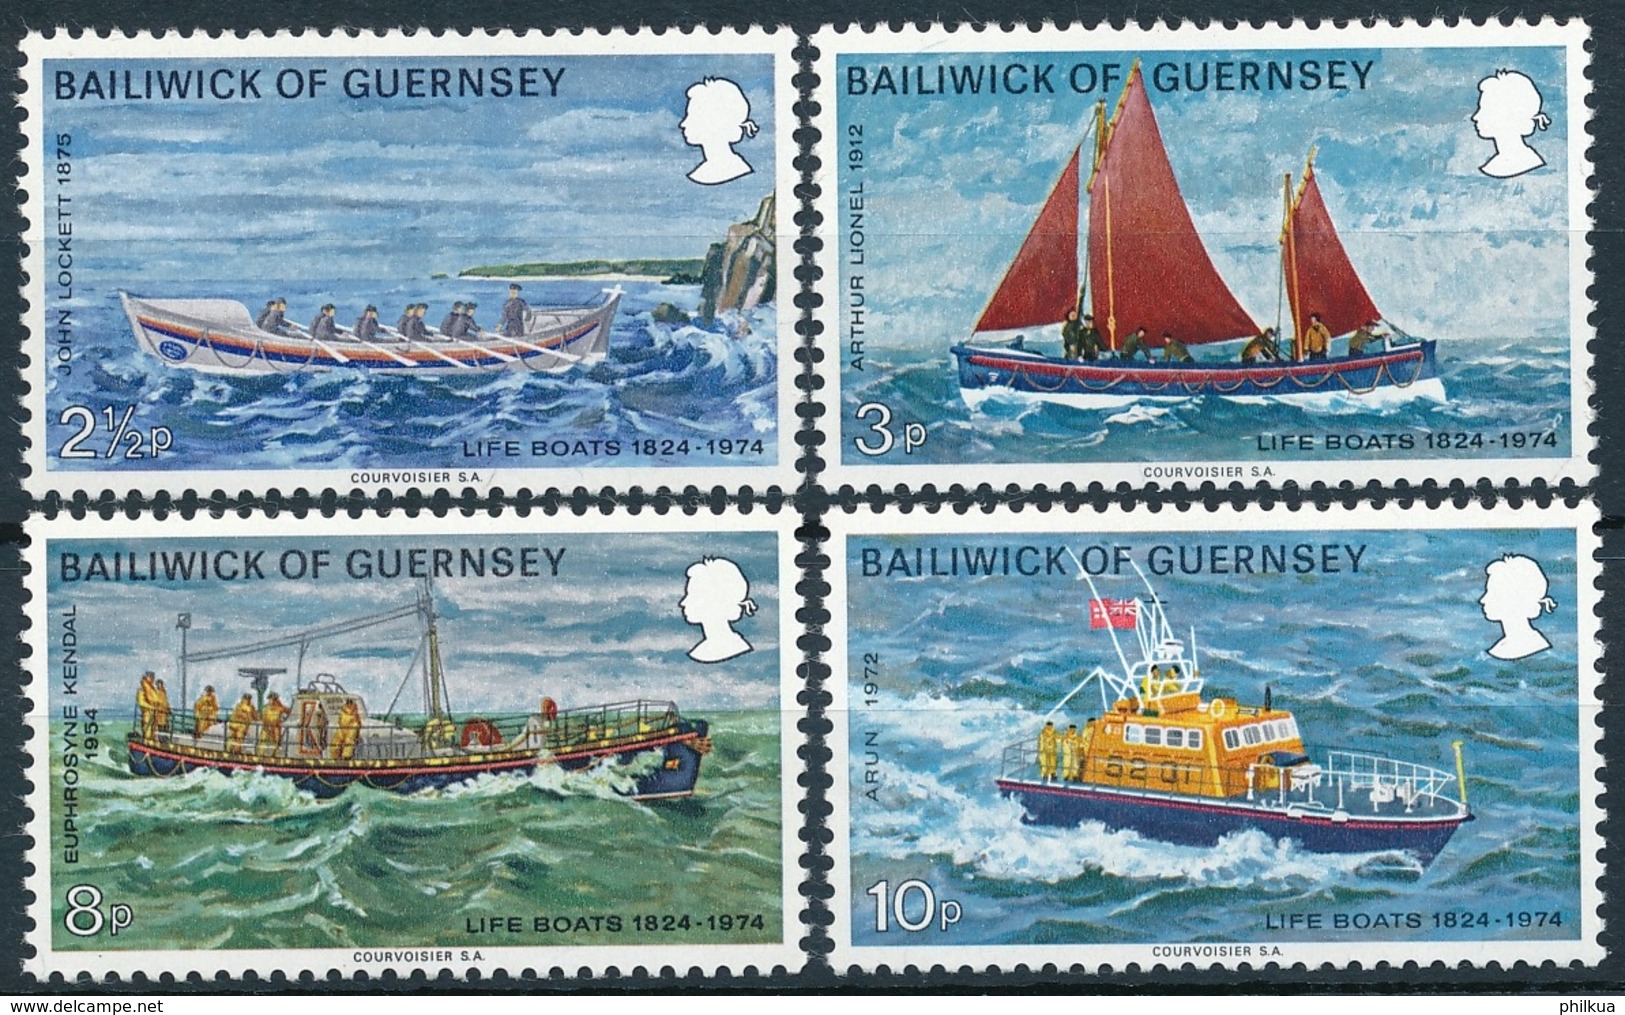 Bailwick Of Guersey - Postfrisch/** - Schiffe, Seefahrt, Segelschiffe, Etc. / Ships, Seafaring, Sailing Ships - Maritime